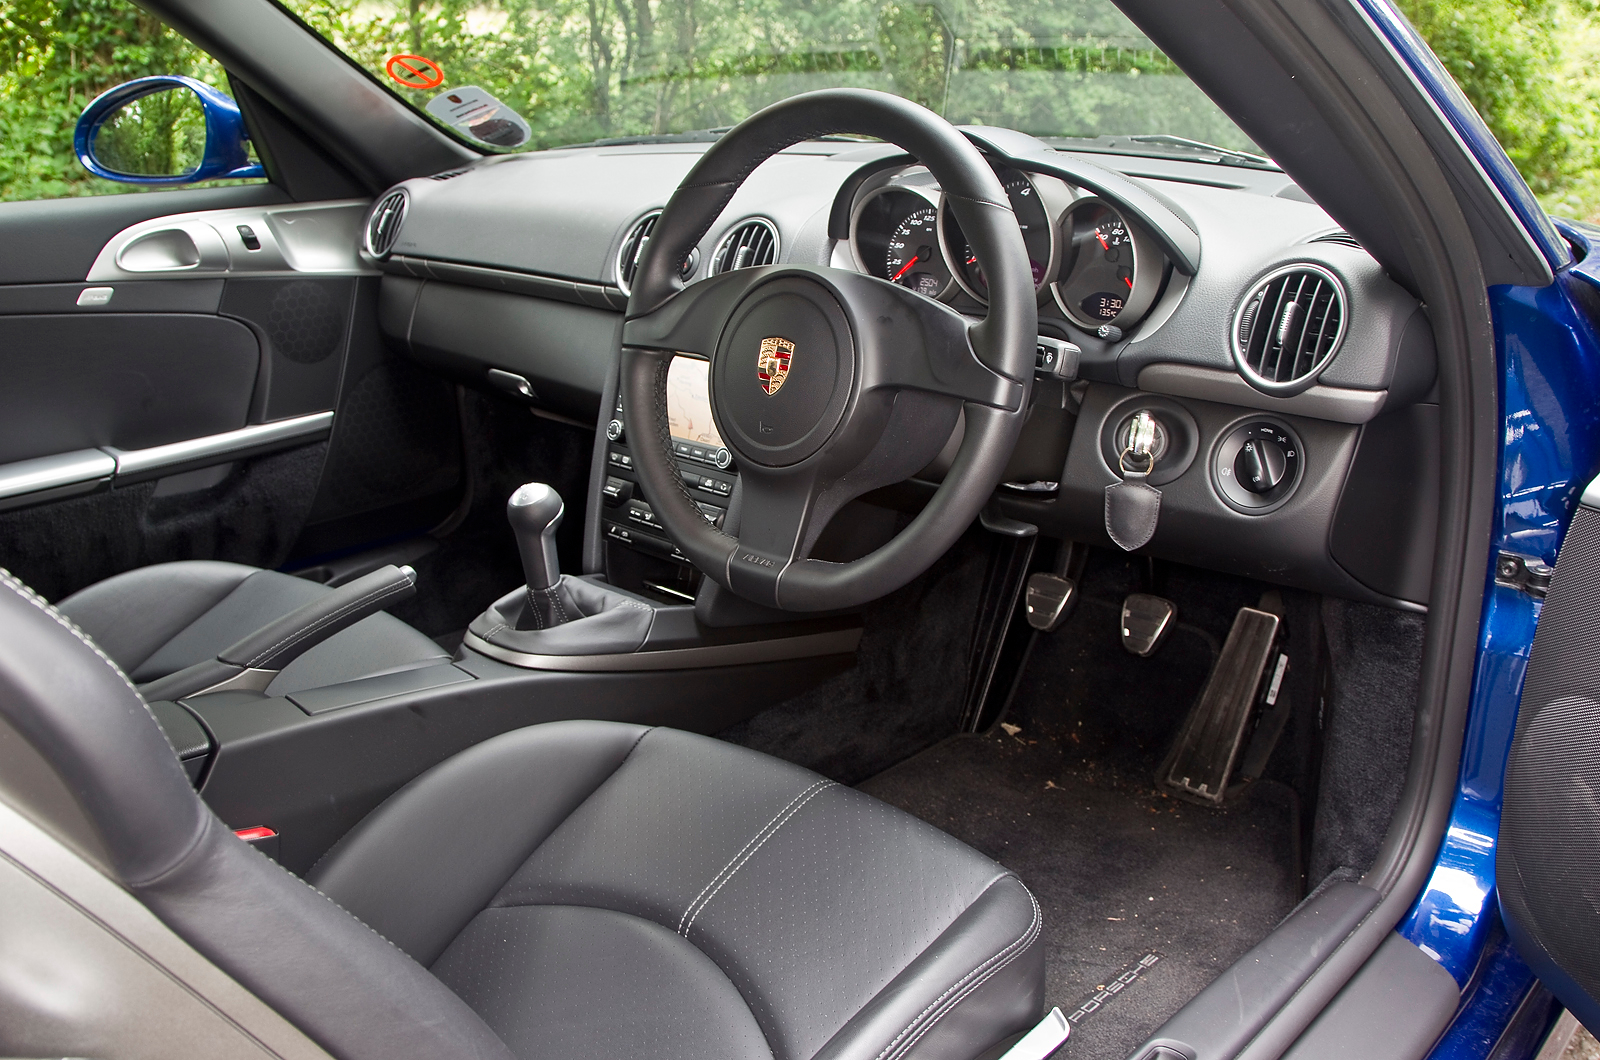 Porsche Cayman interior